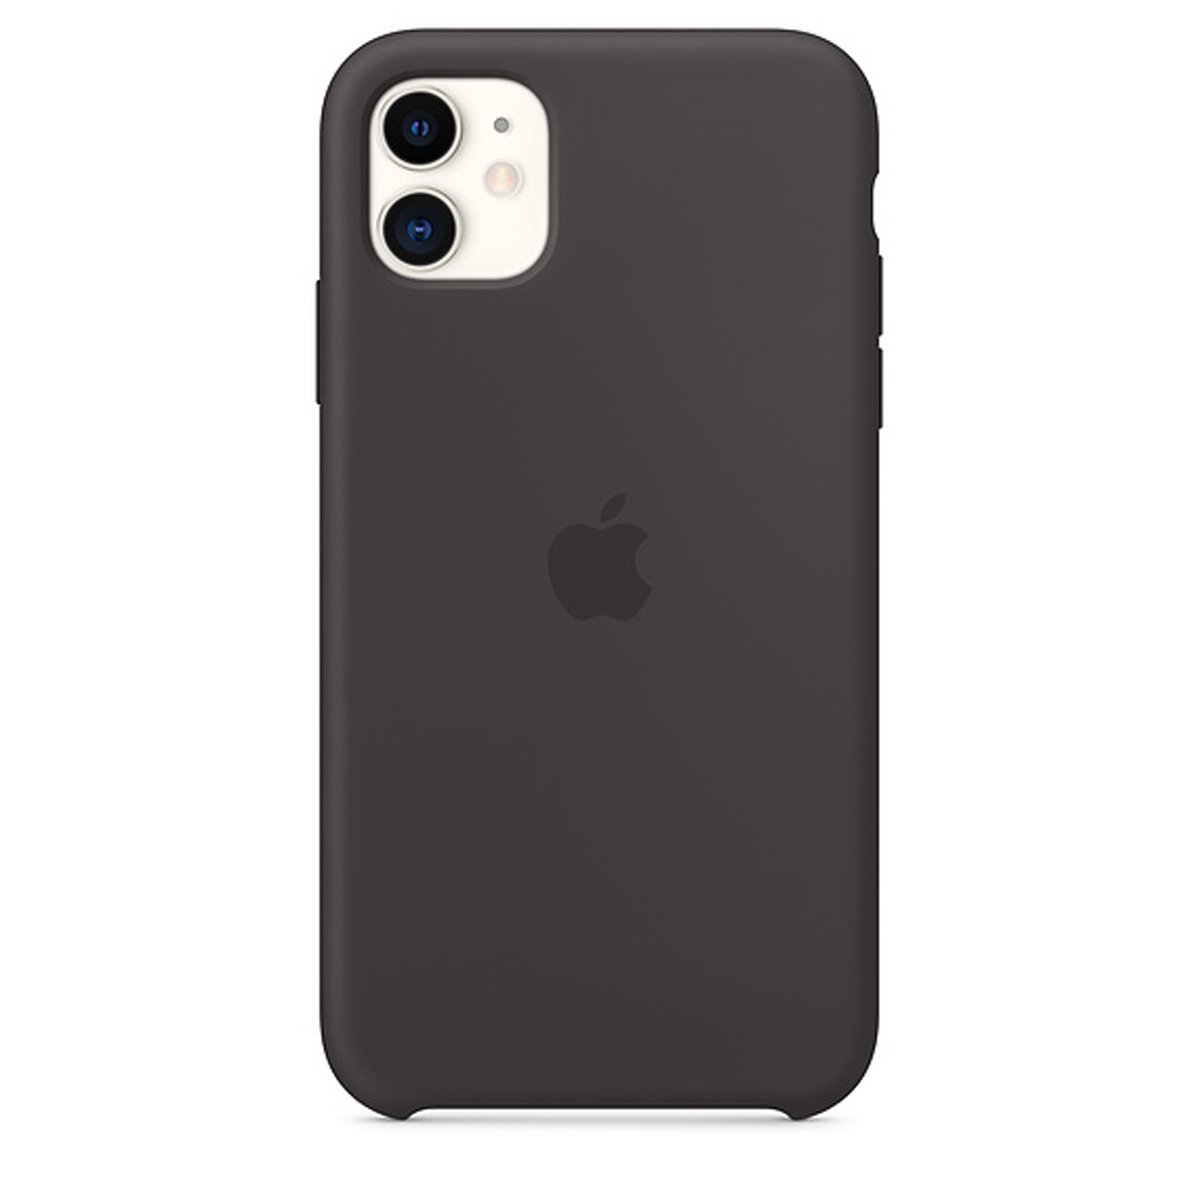 Apple iPhone11 Silicone Case MWVU2ZM Black